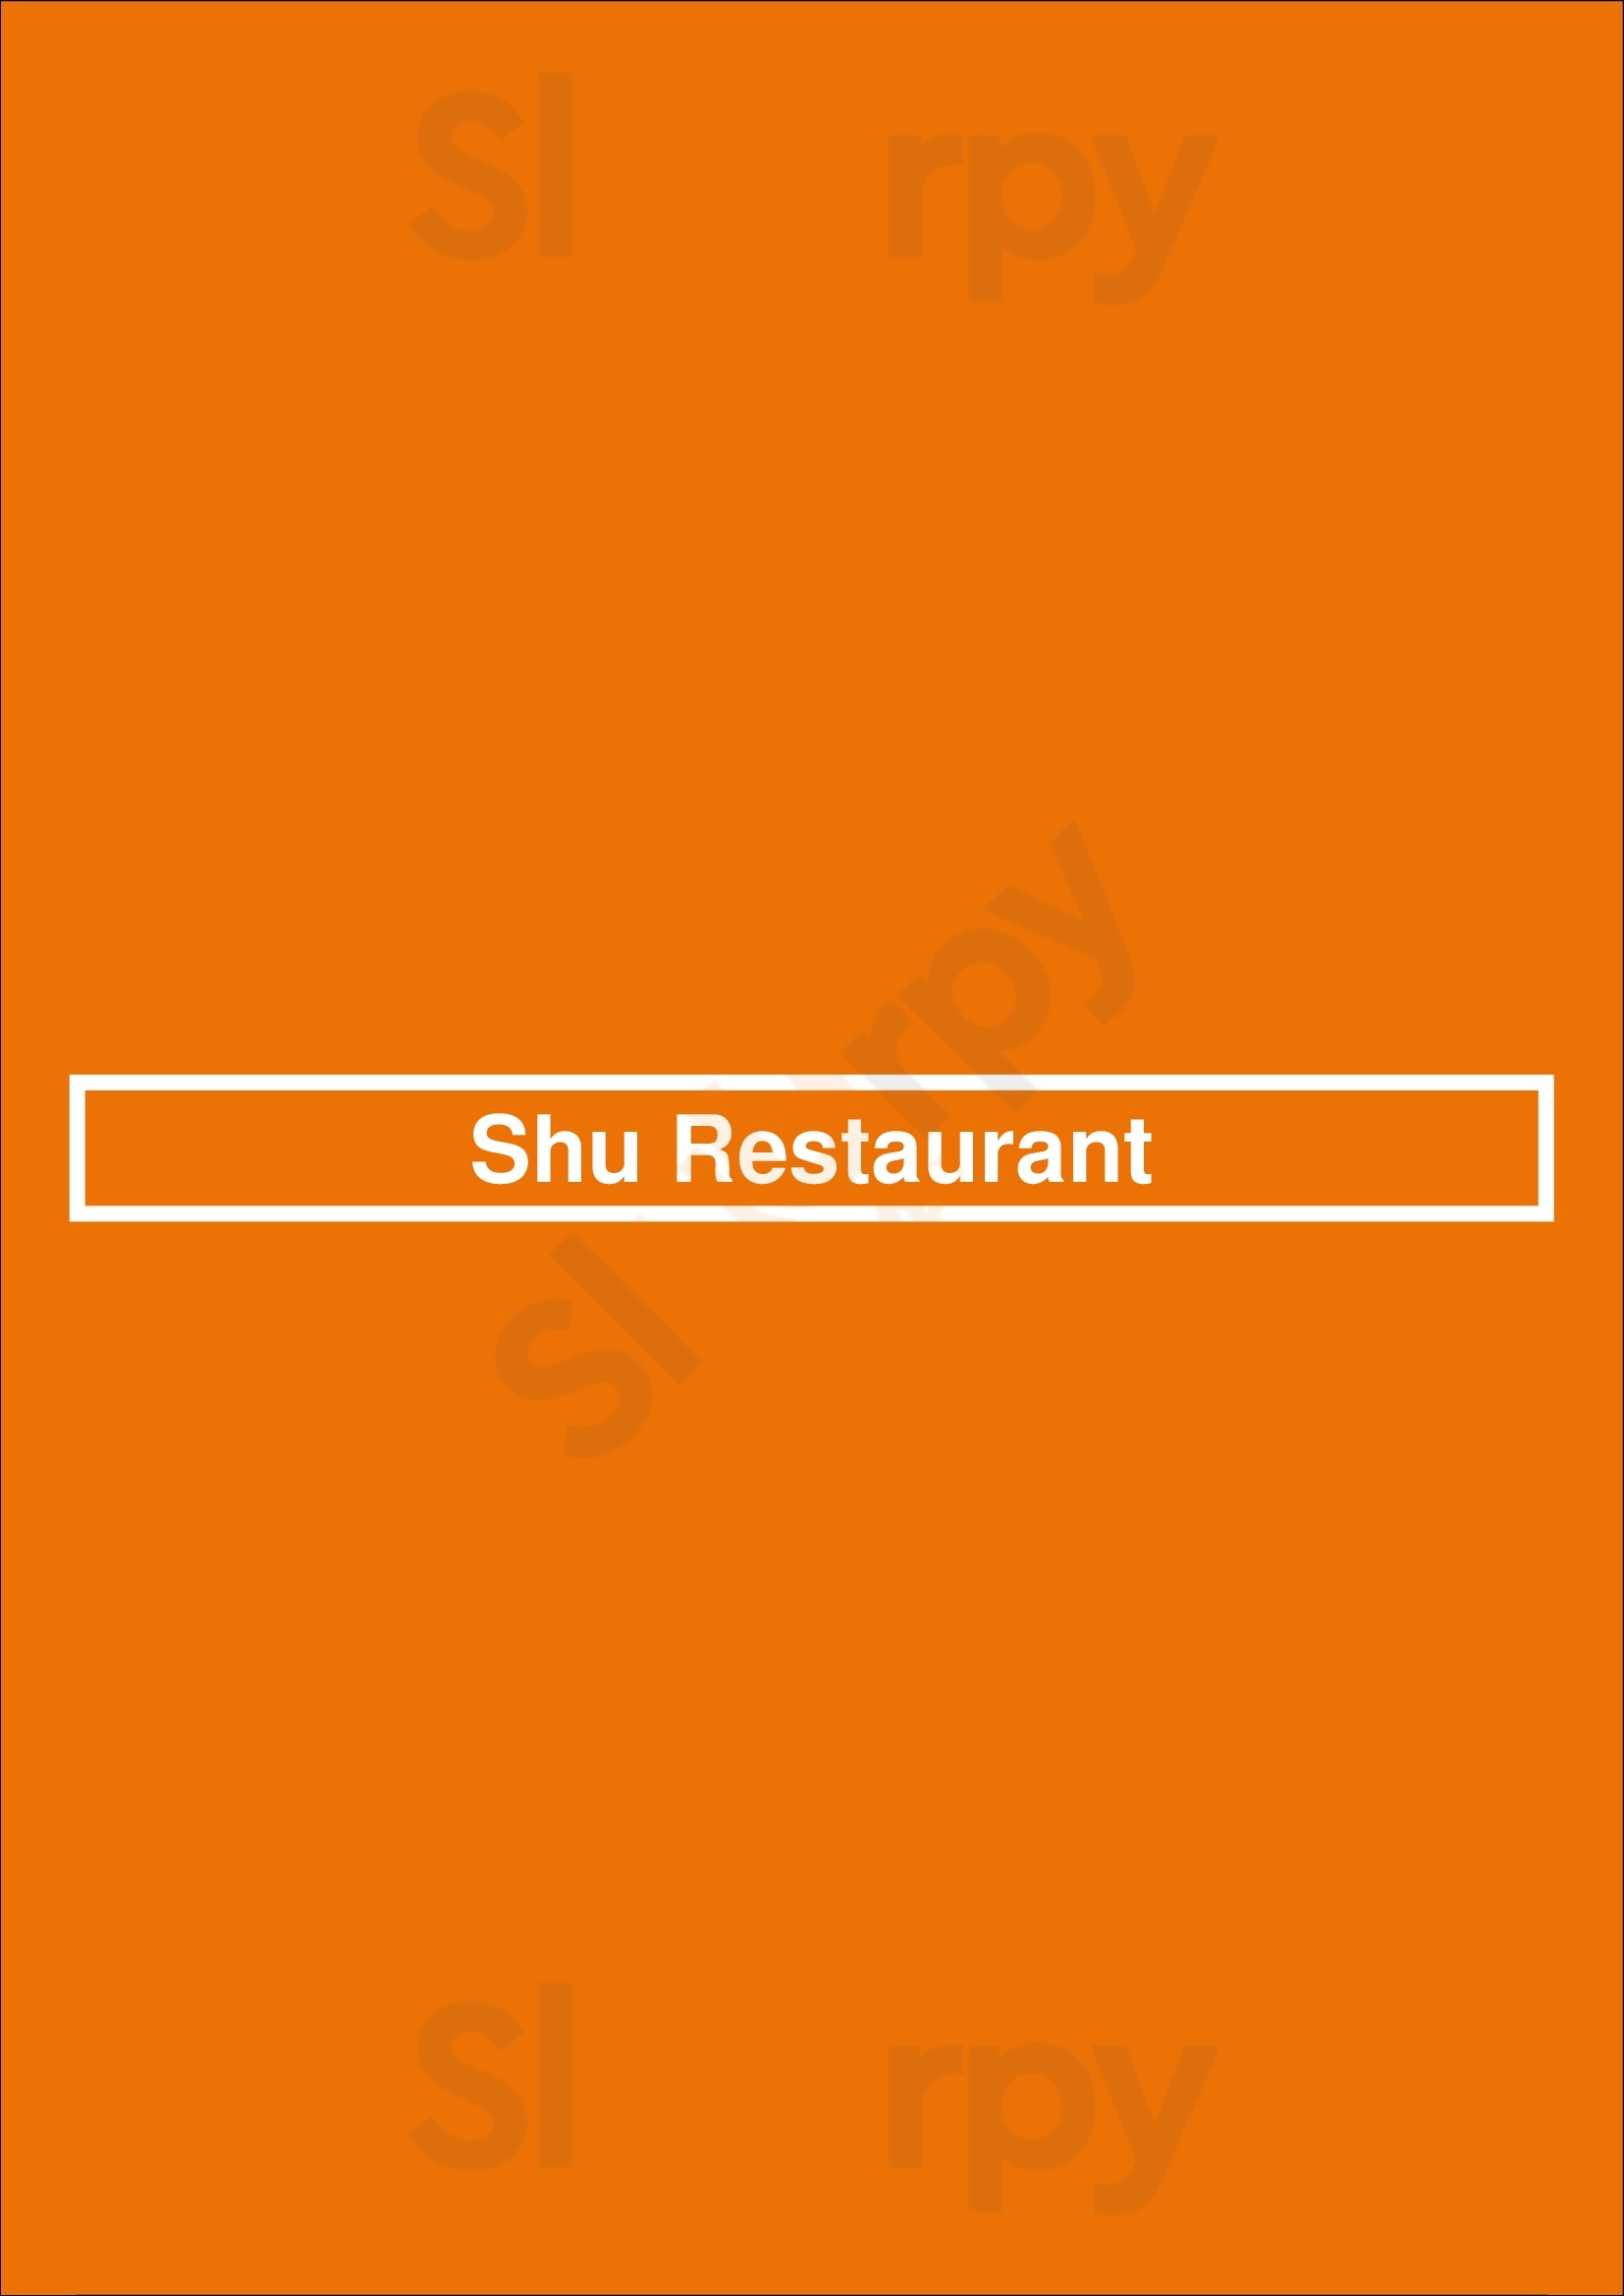 Shu Restaurant Los Angeles Menu - 1